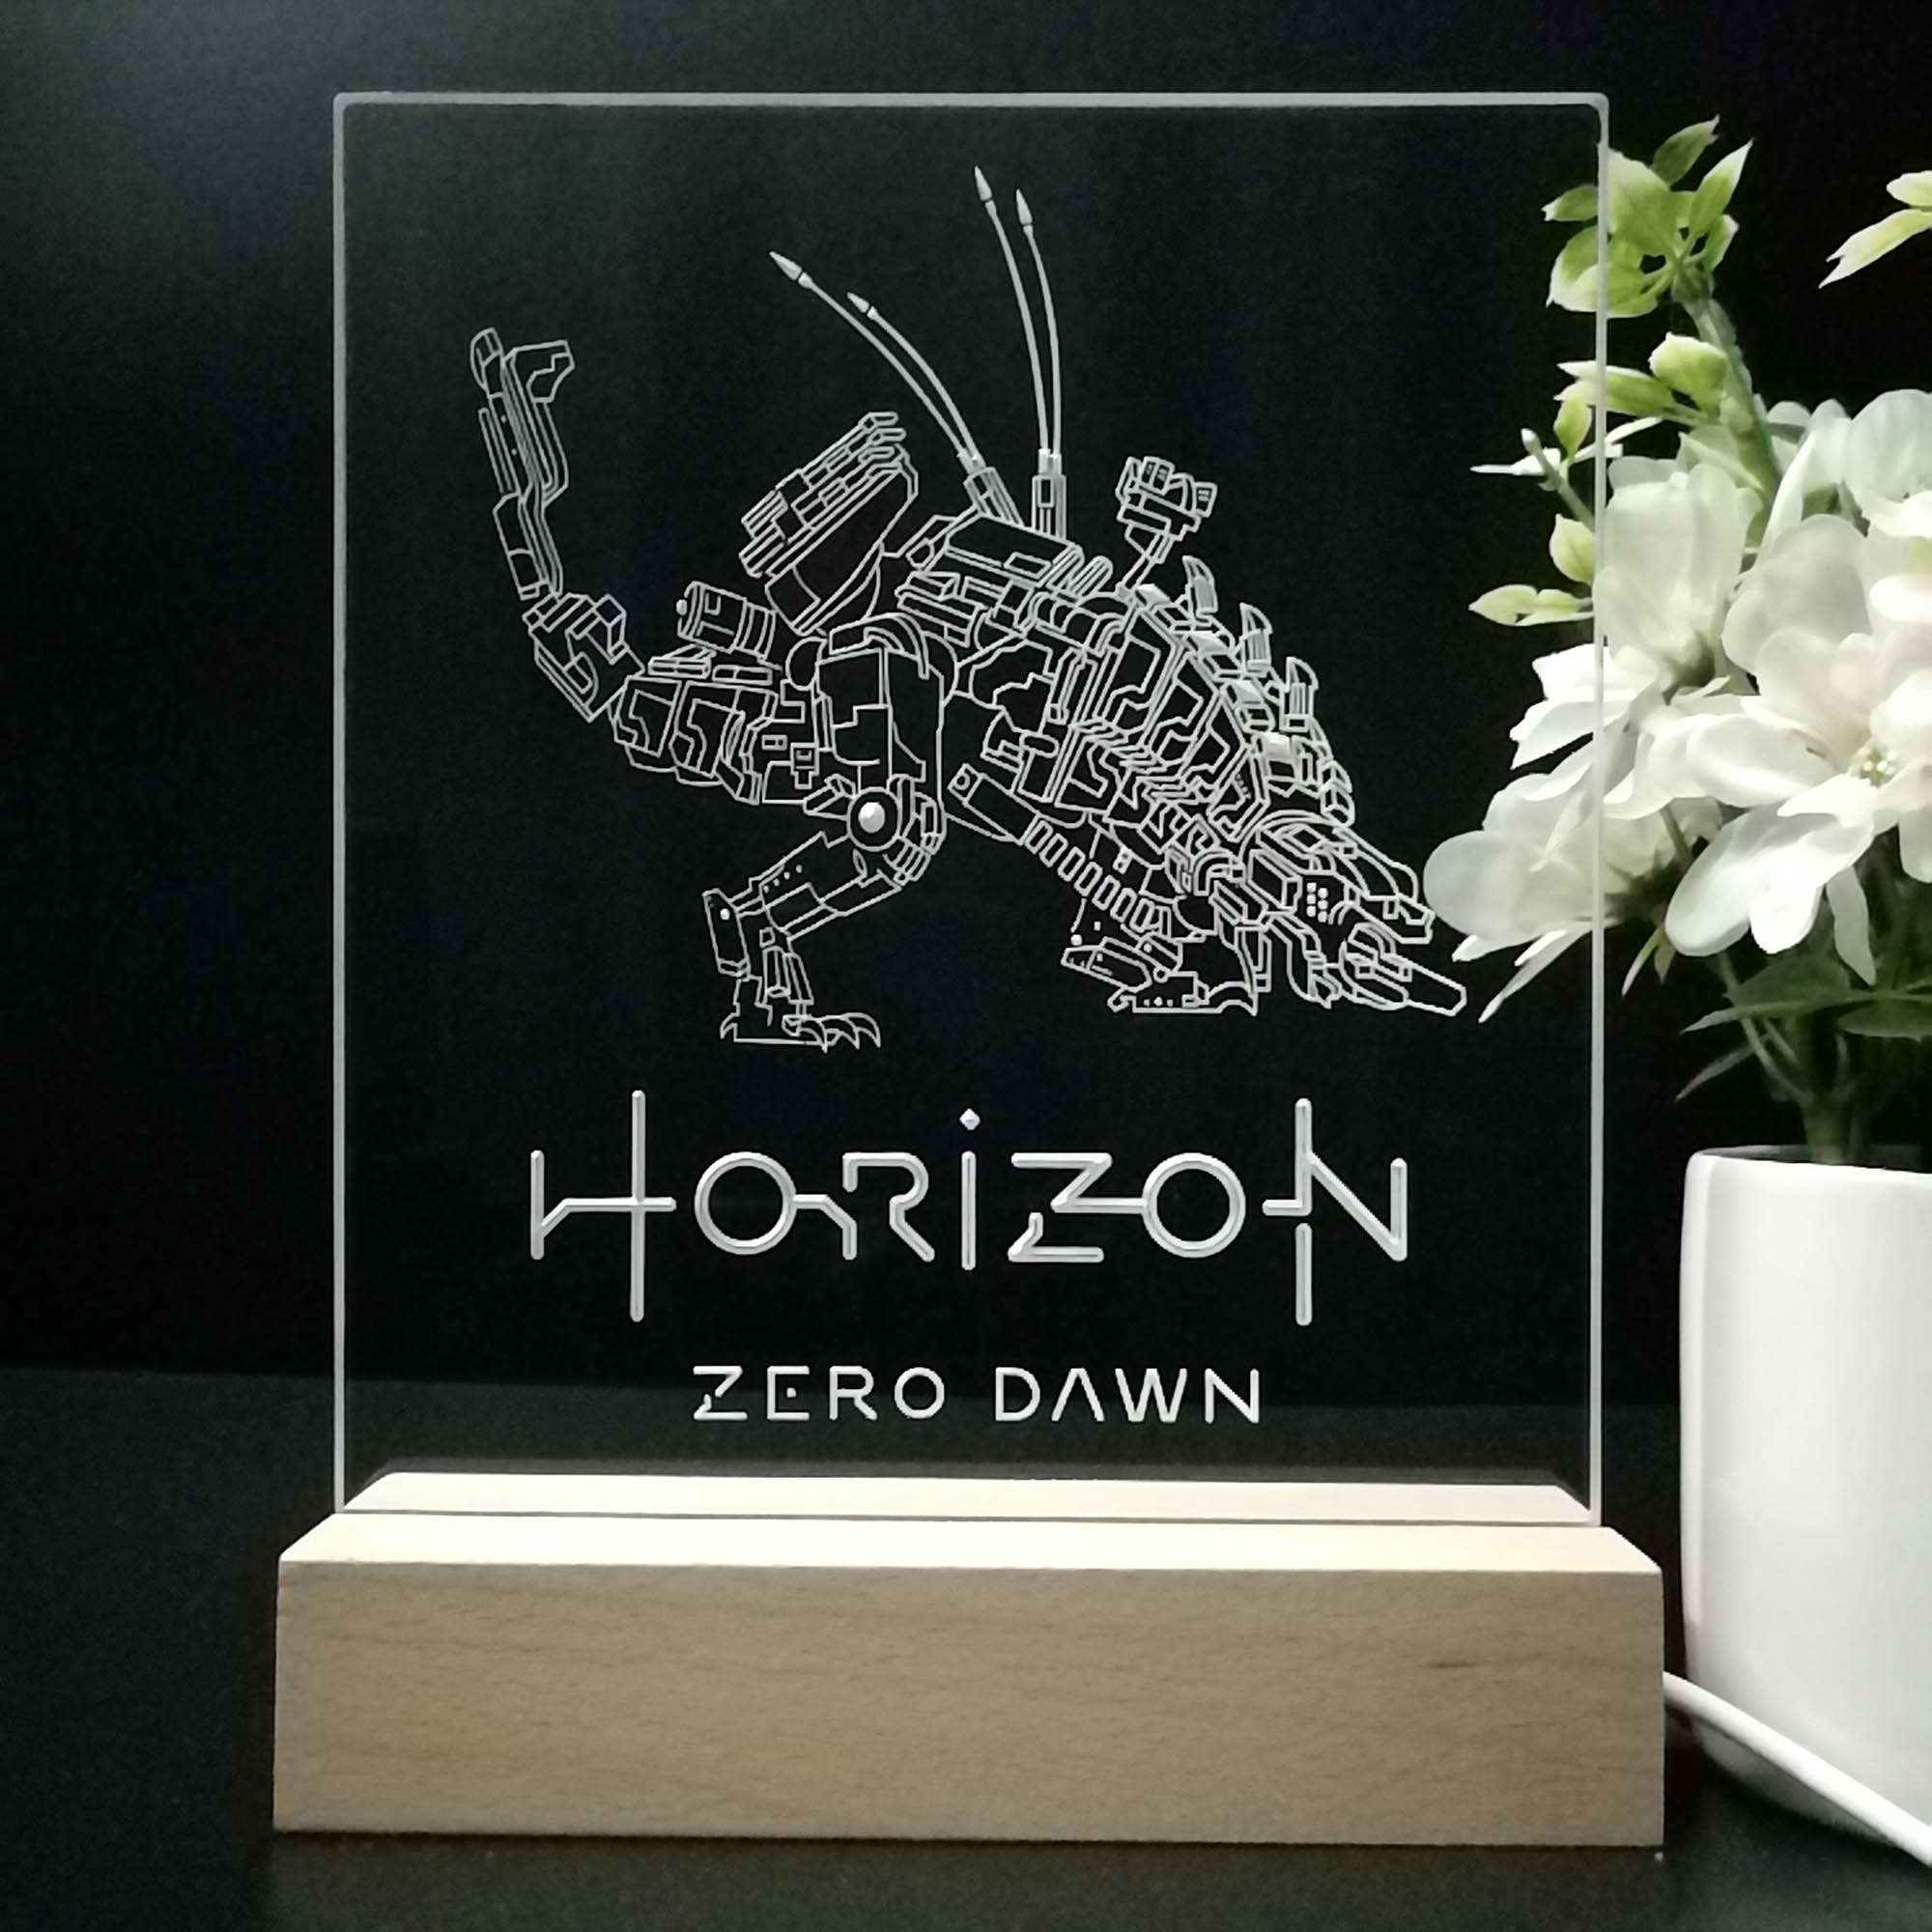 Horizon Zero Dawn Thunderjaws Game Room LED Sign Lamp Display